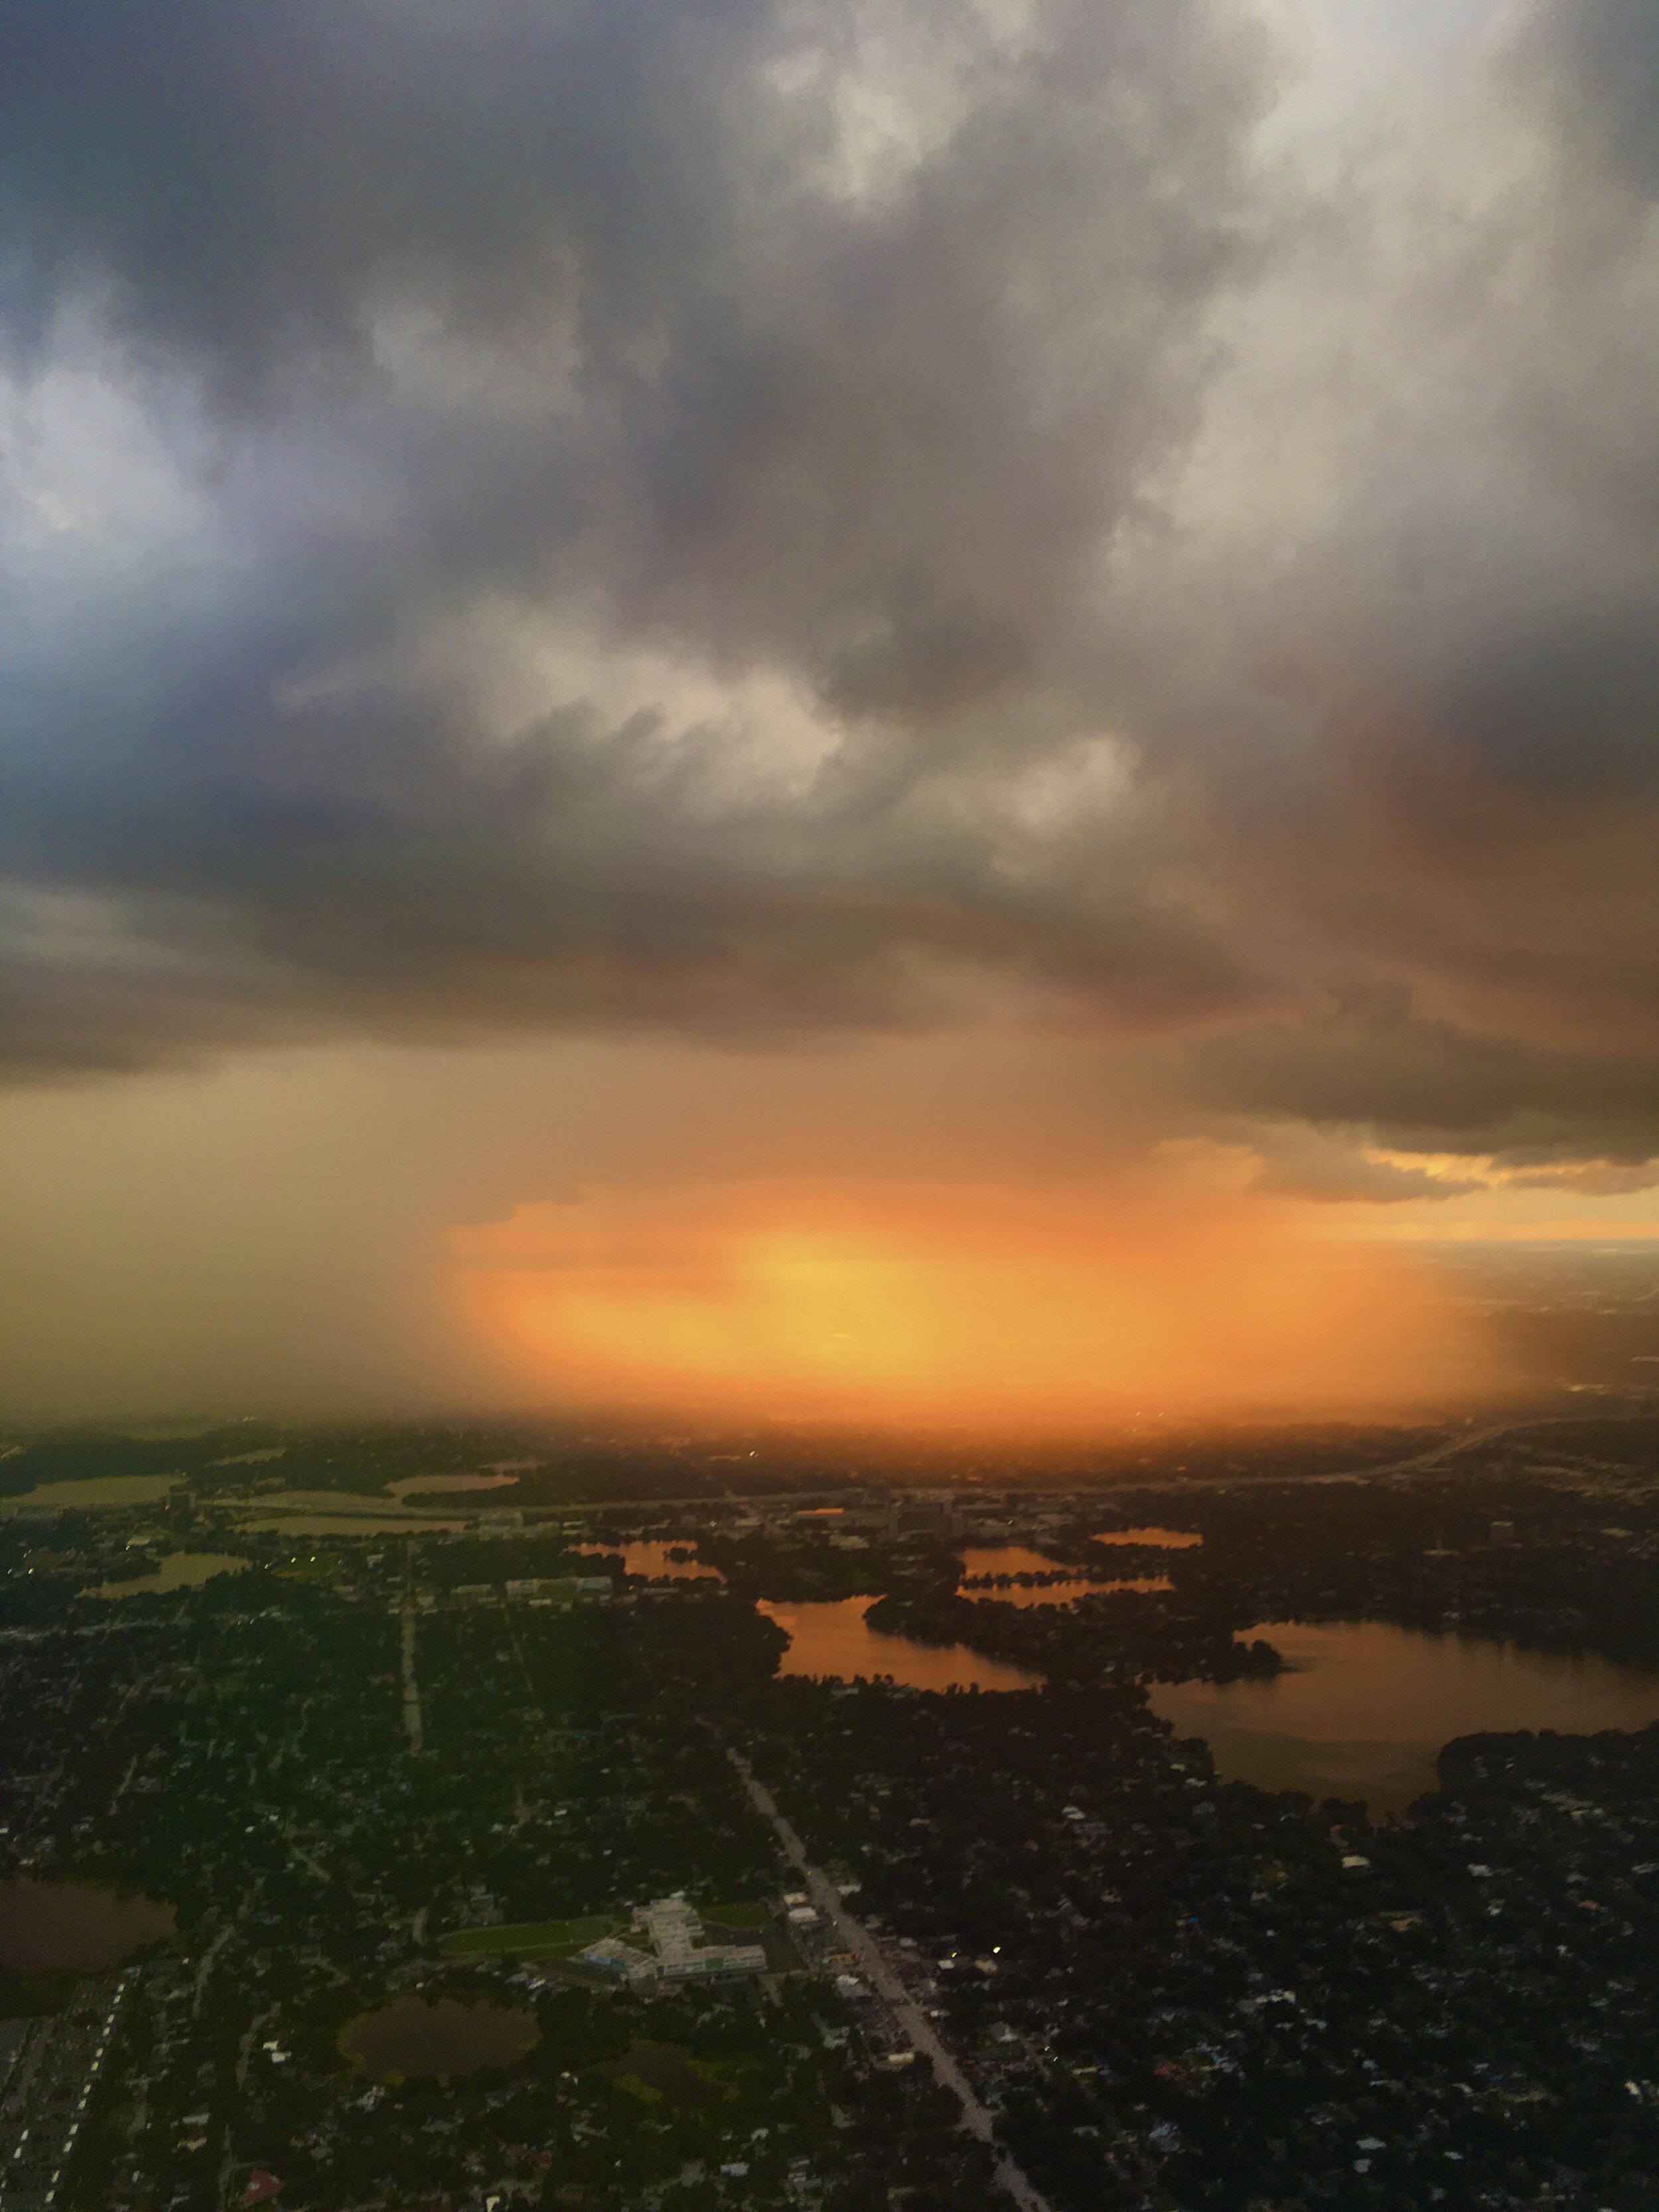 Sunset rainstorm landing in Orlando, Florida